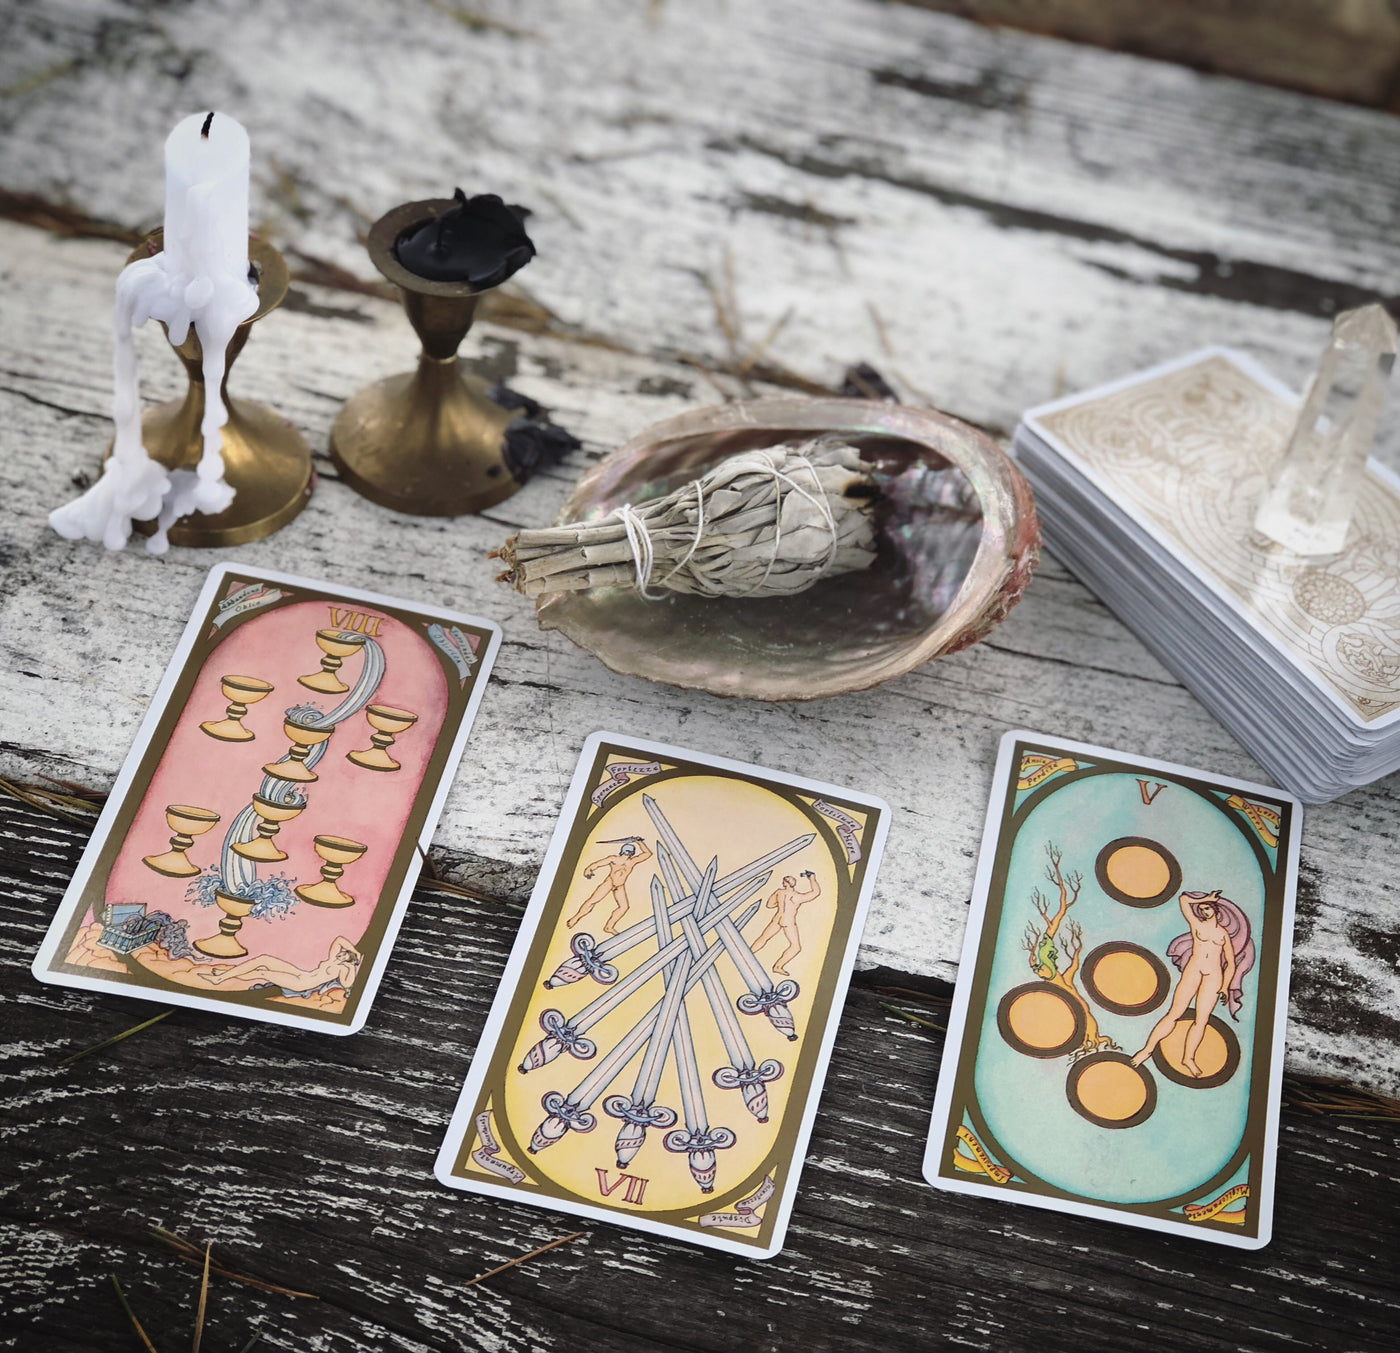 Three assorted The Renaissance Tarot deck cards on display.